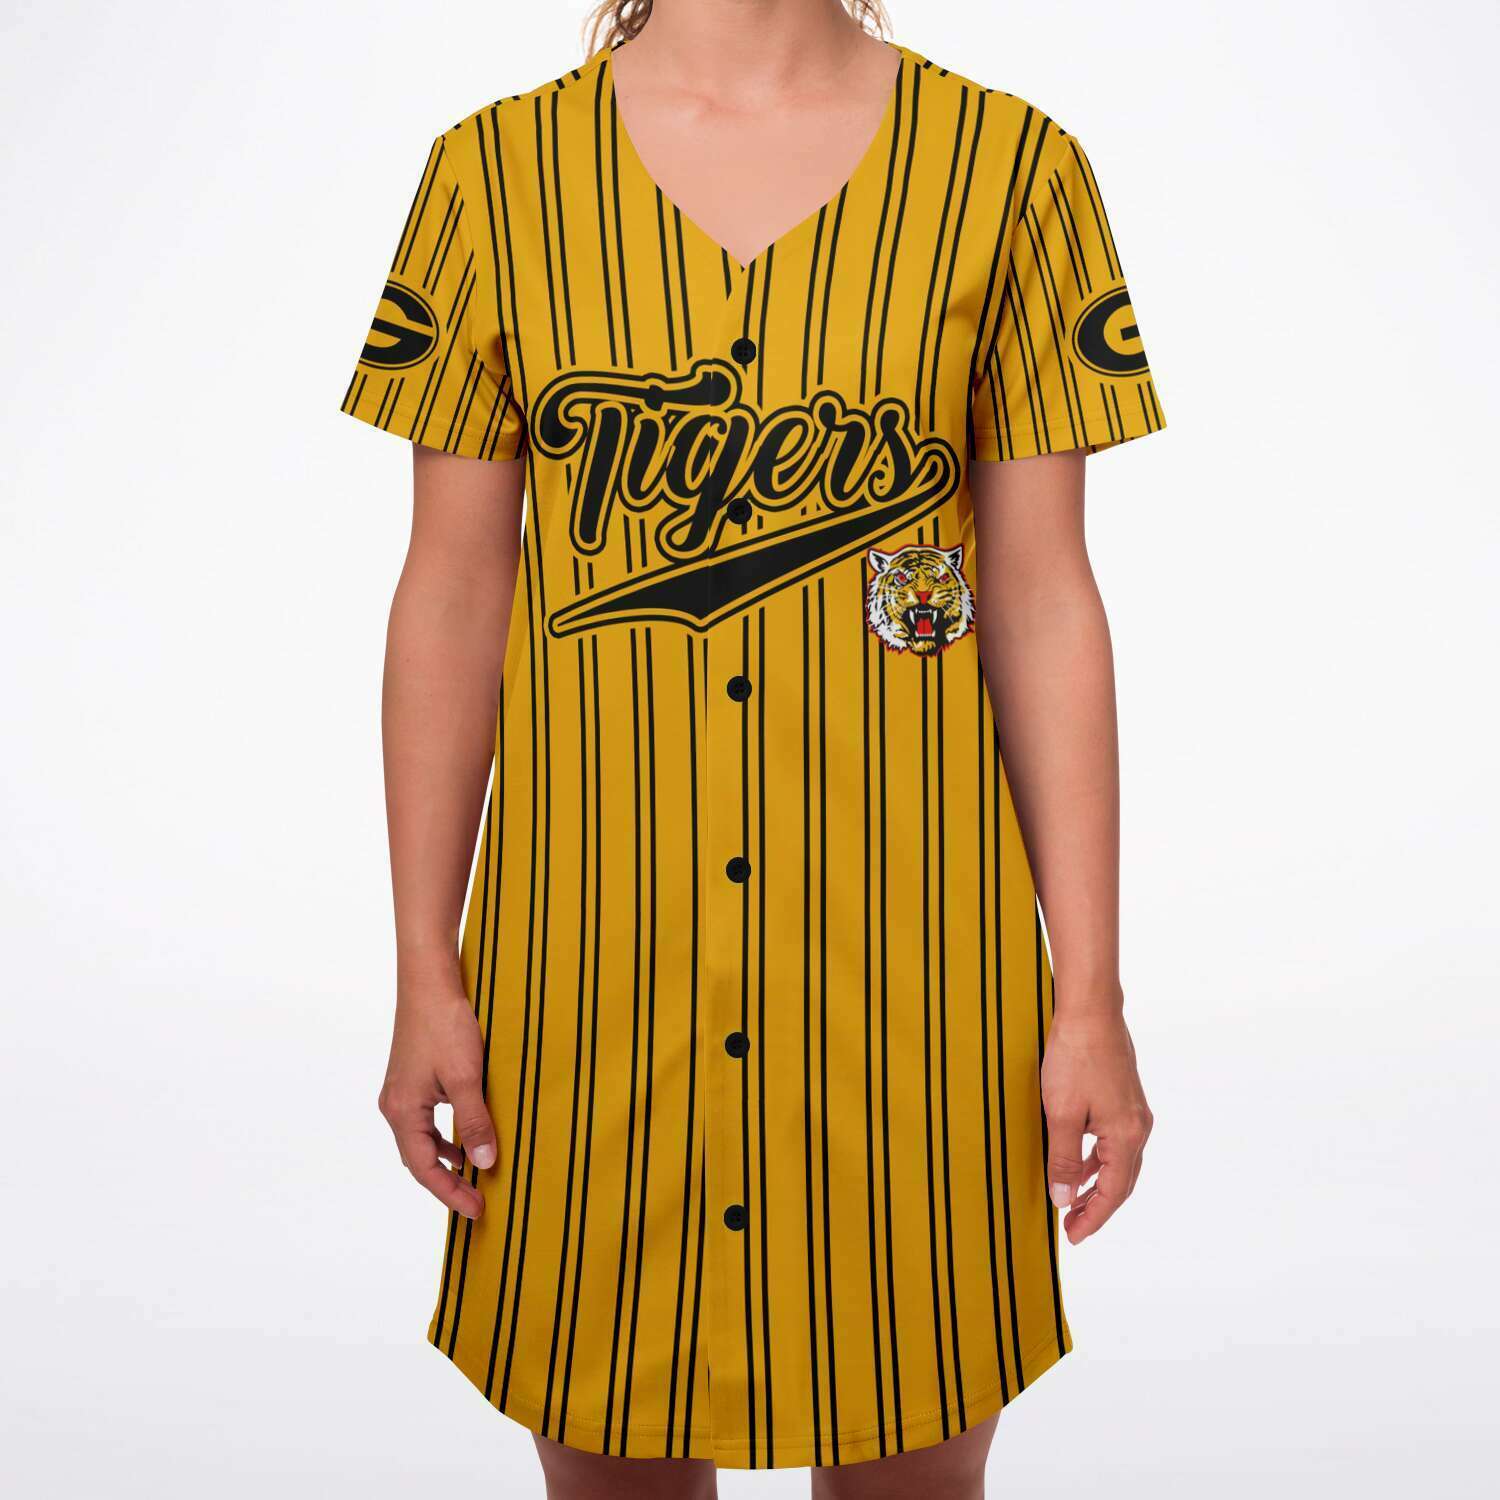 Grambling Tigers baseball jersey v4361 - joxtee